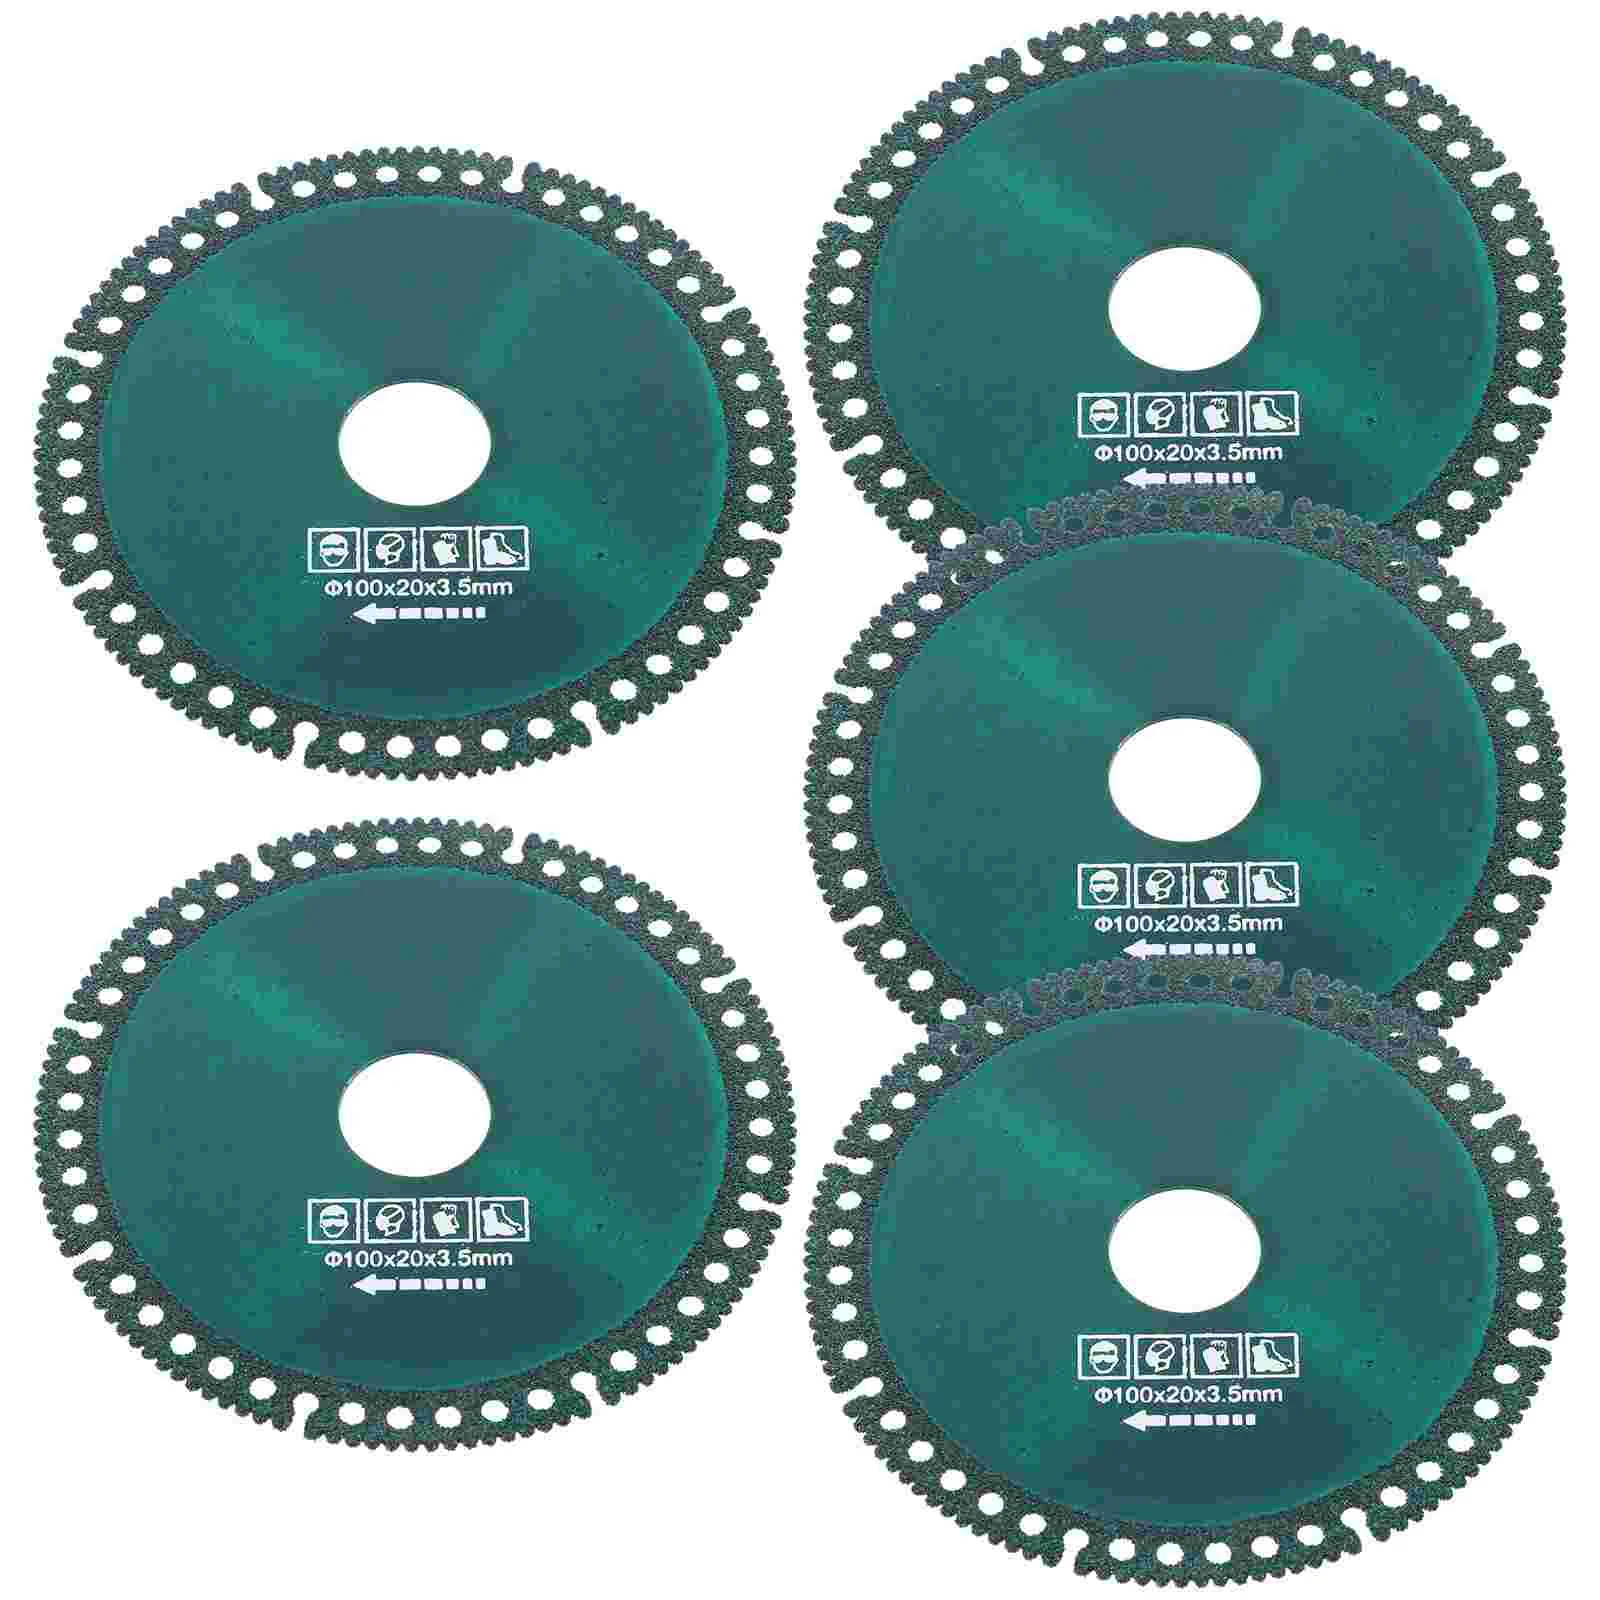 

5 Pcs Circle Cutting Disc Ceramic Wheel Grinder Ceramics Metal Discs Saw Blade Replacement Diamond